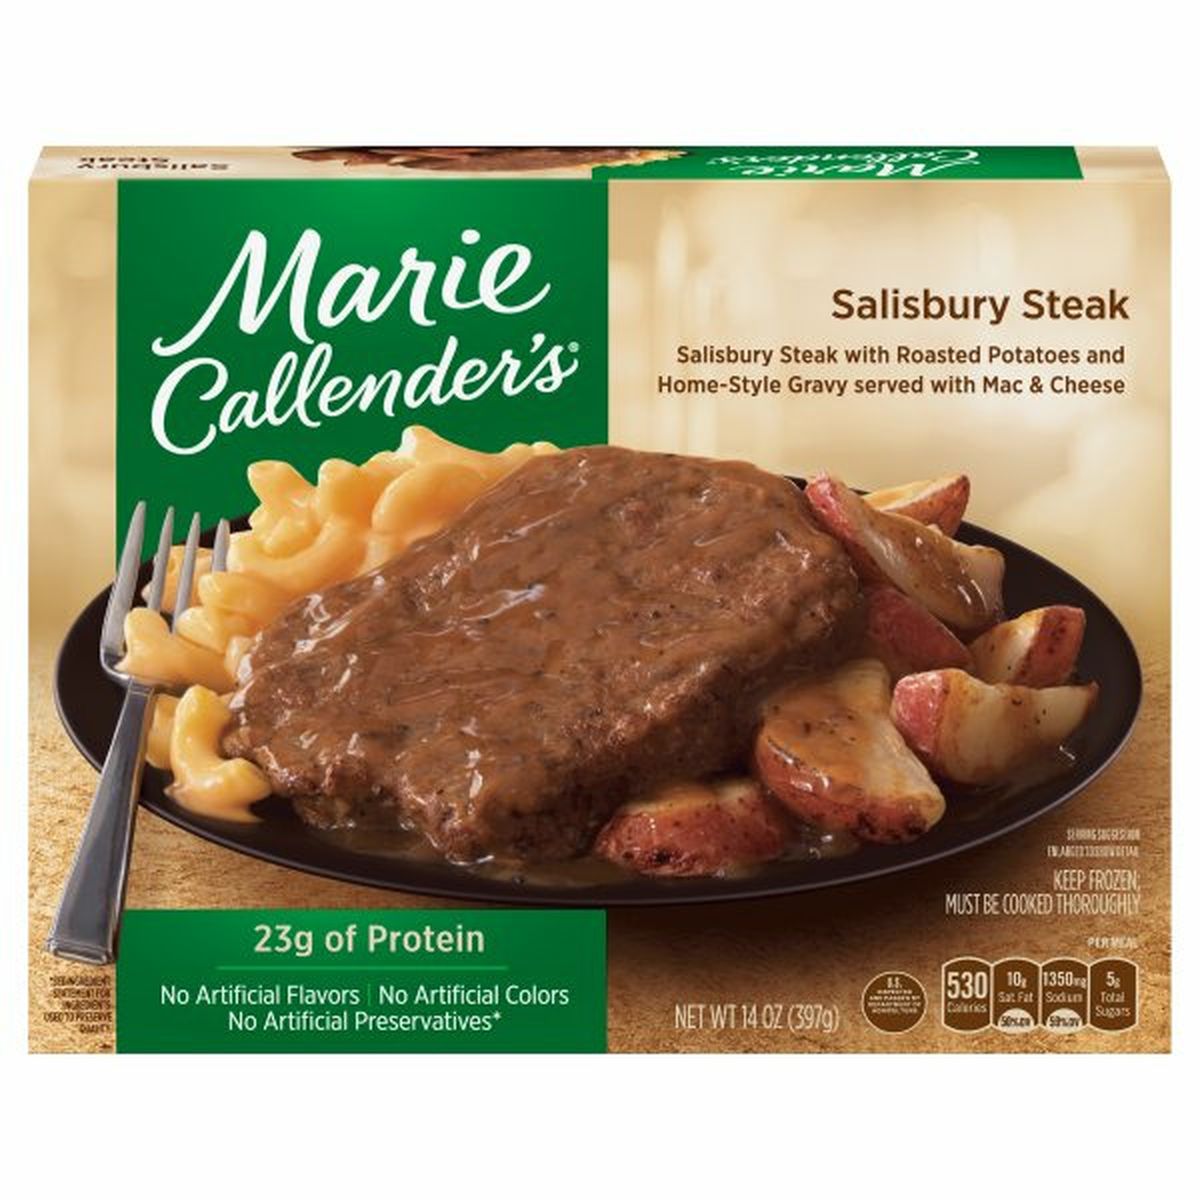 Calories in Marie Callender's Salisbury Steak